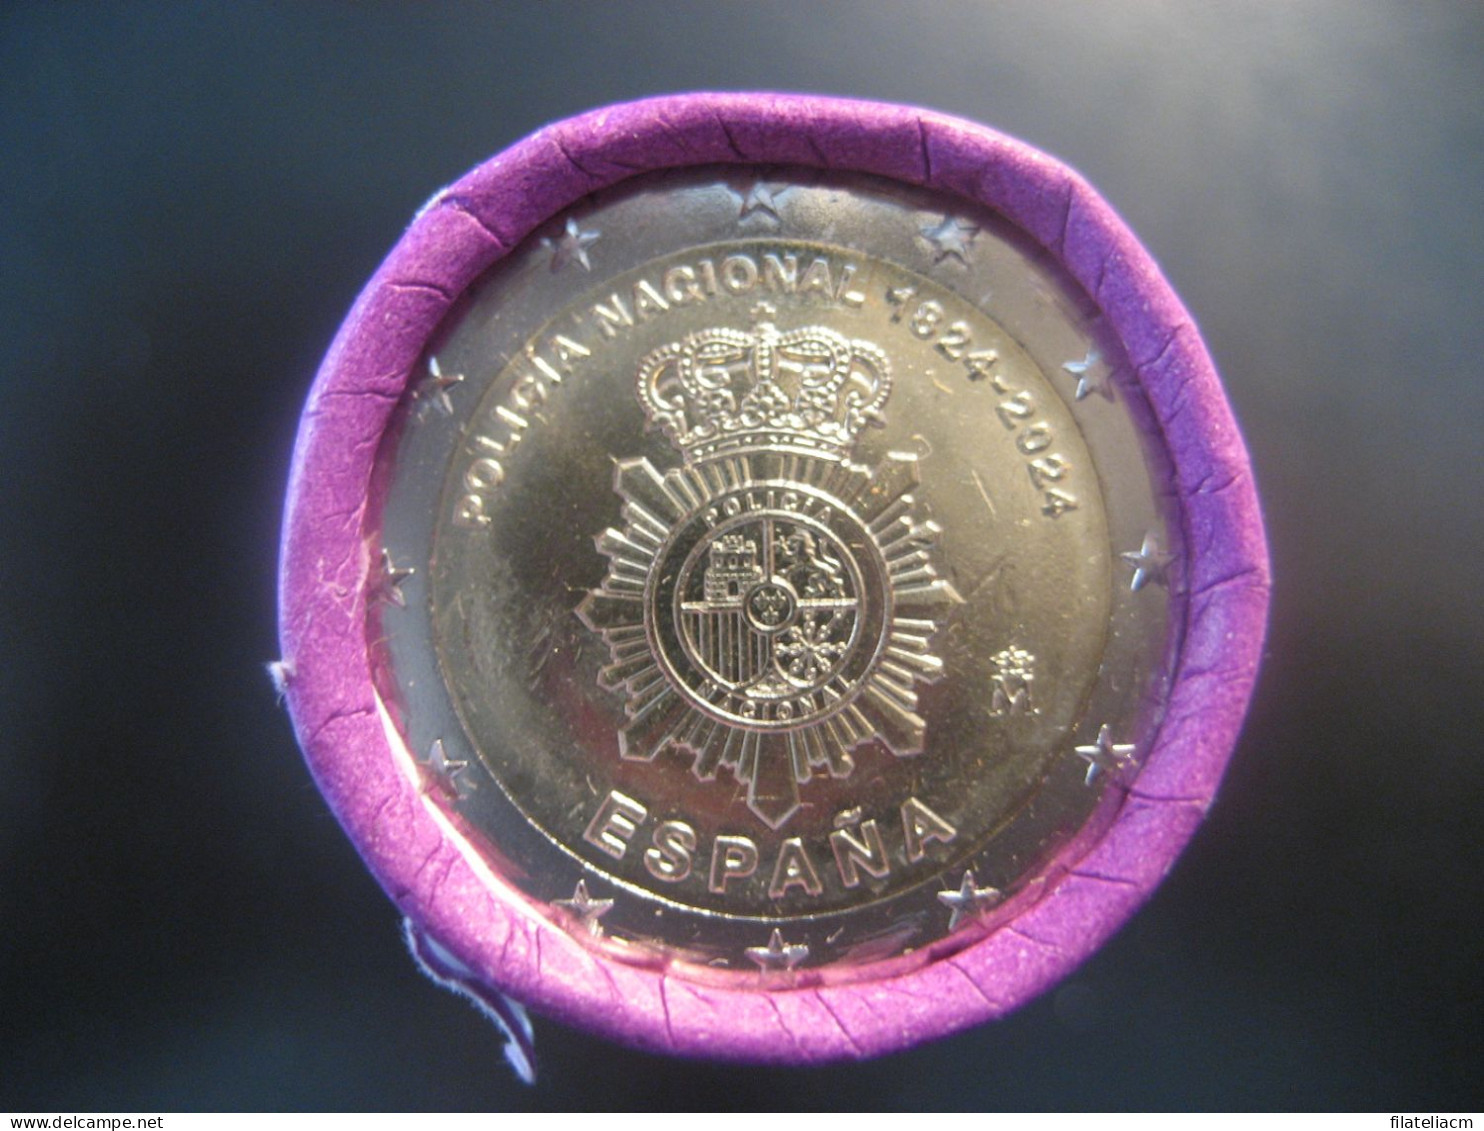 2 EUR 2024 SPAIN Policia Nacional POLICE Uncirculated From Cartridge Euro Coin - Spanien